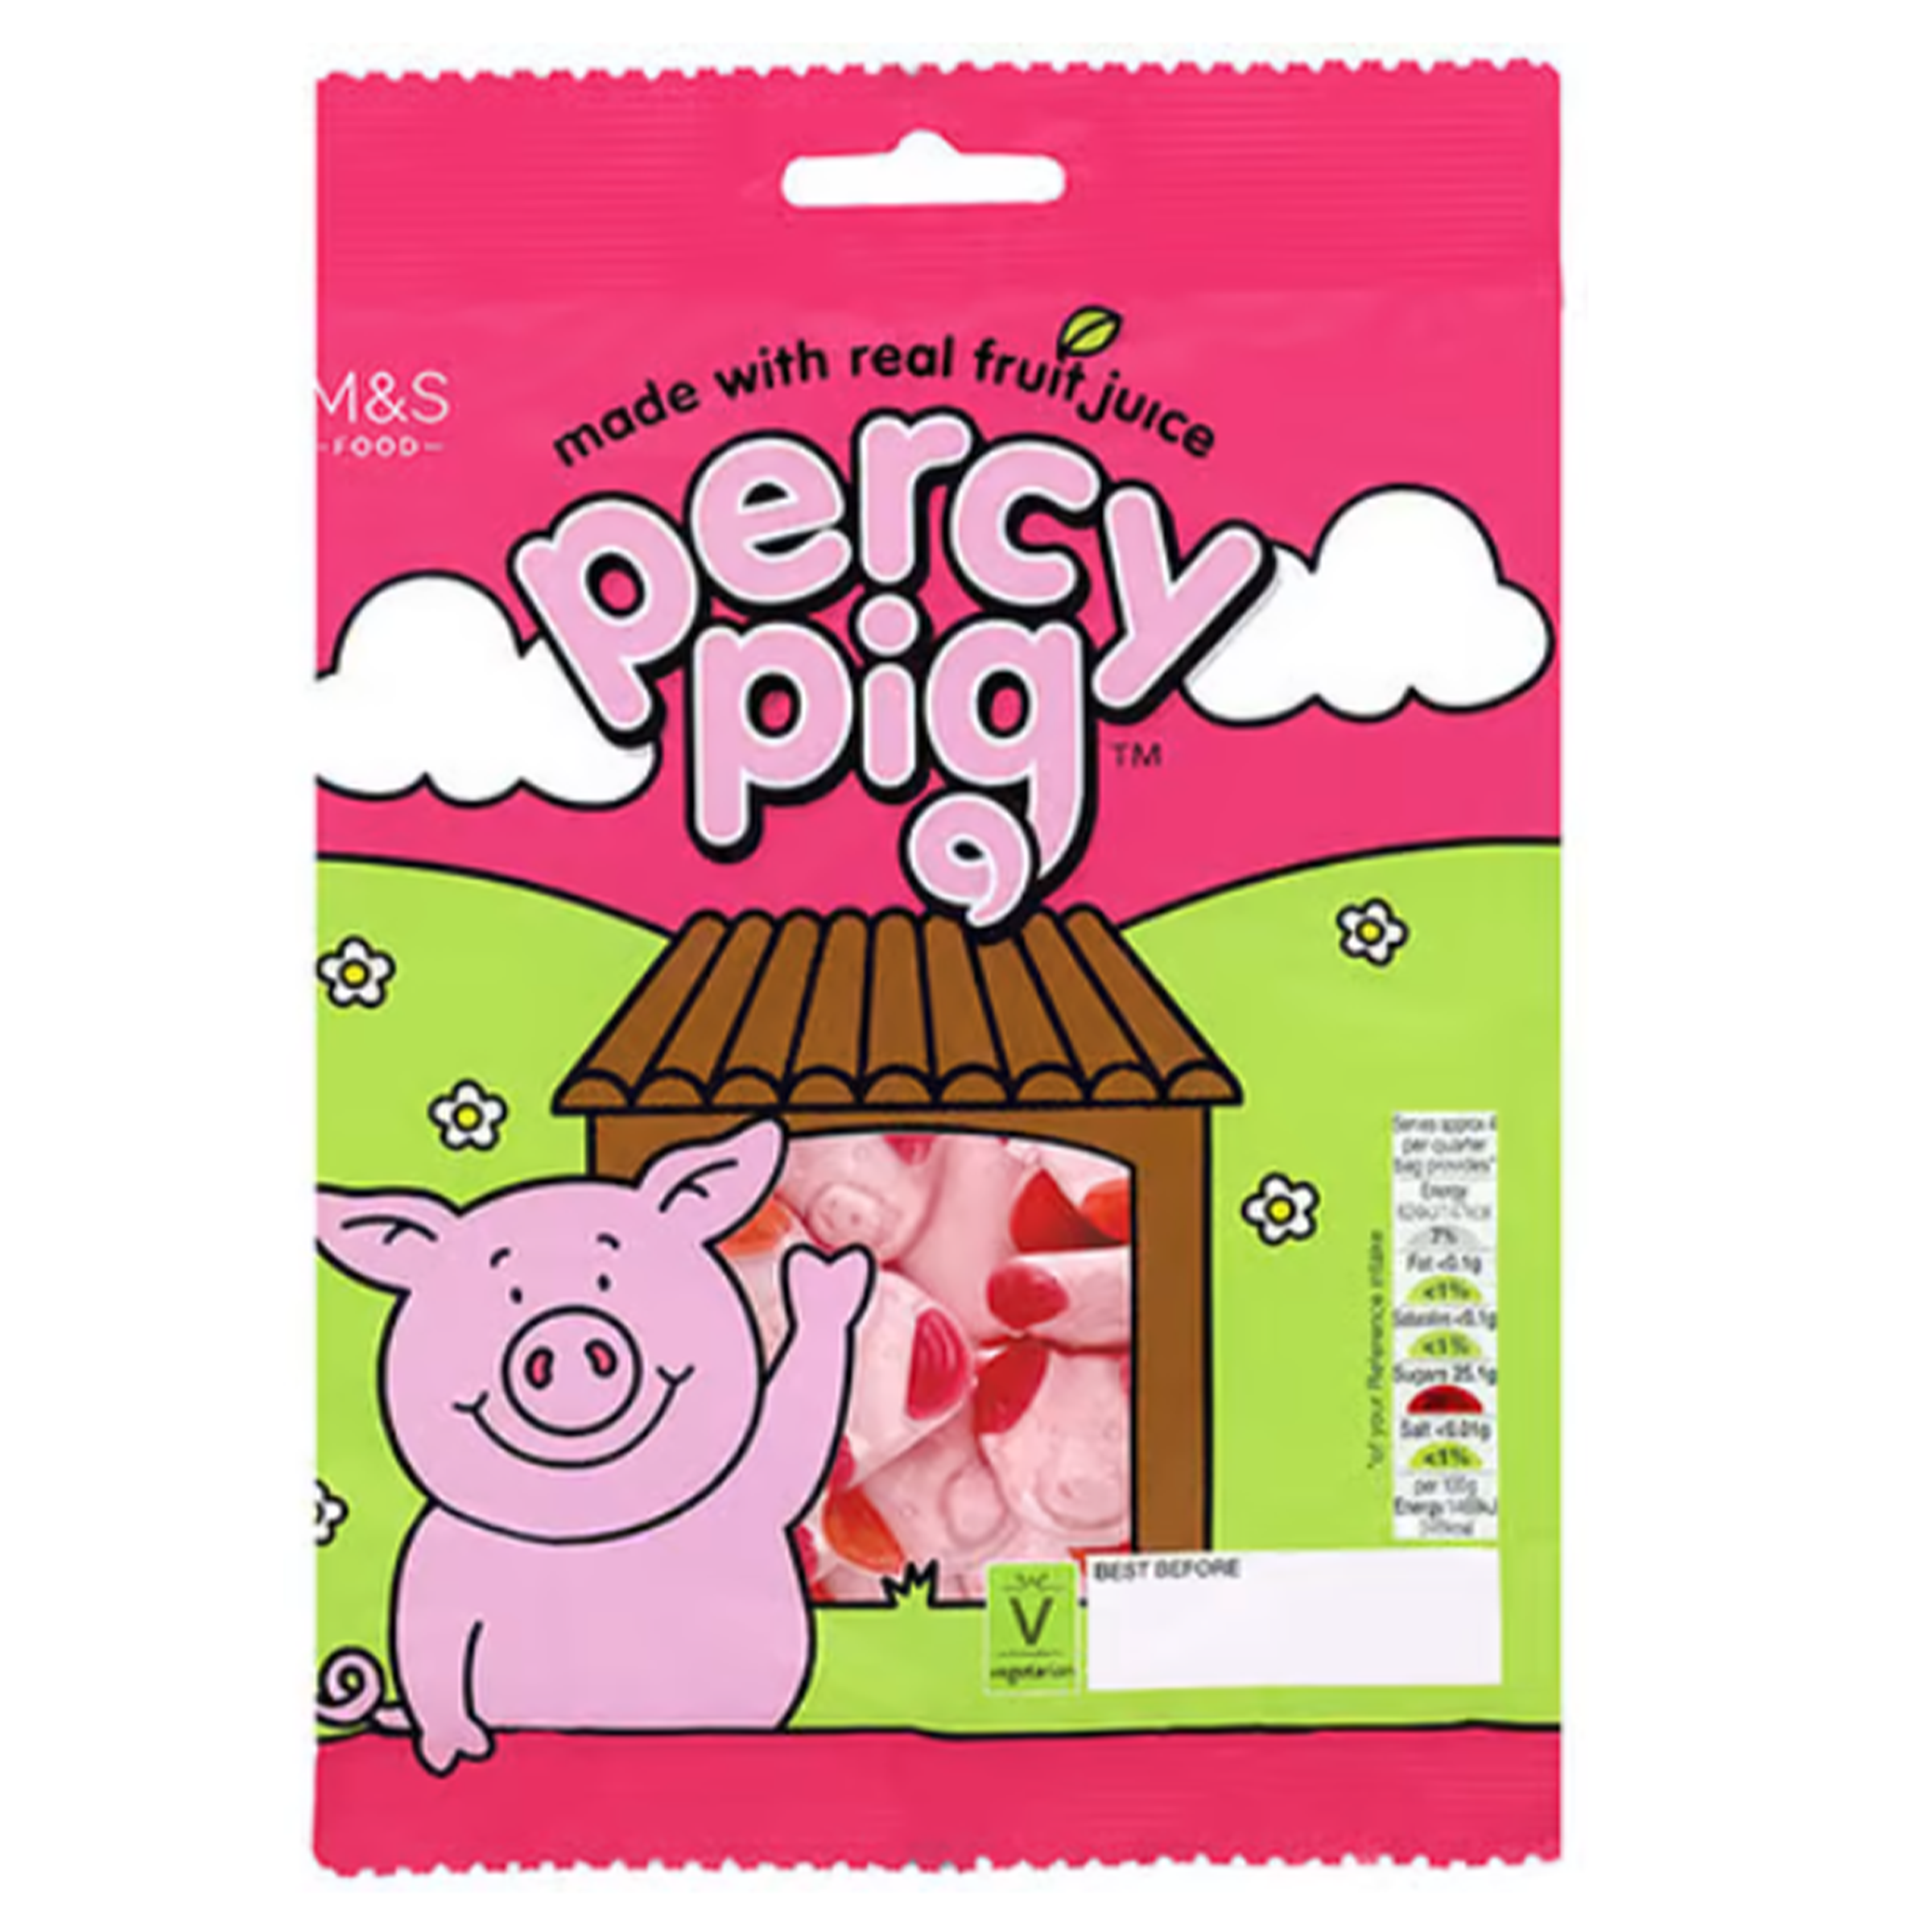 Percy Pig - UK